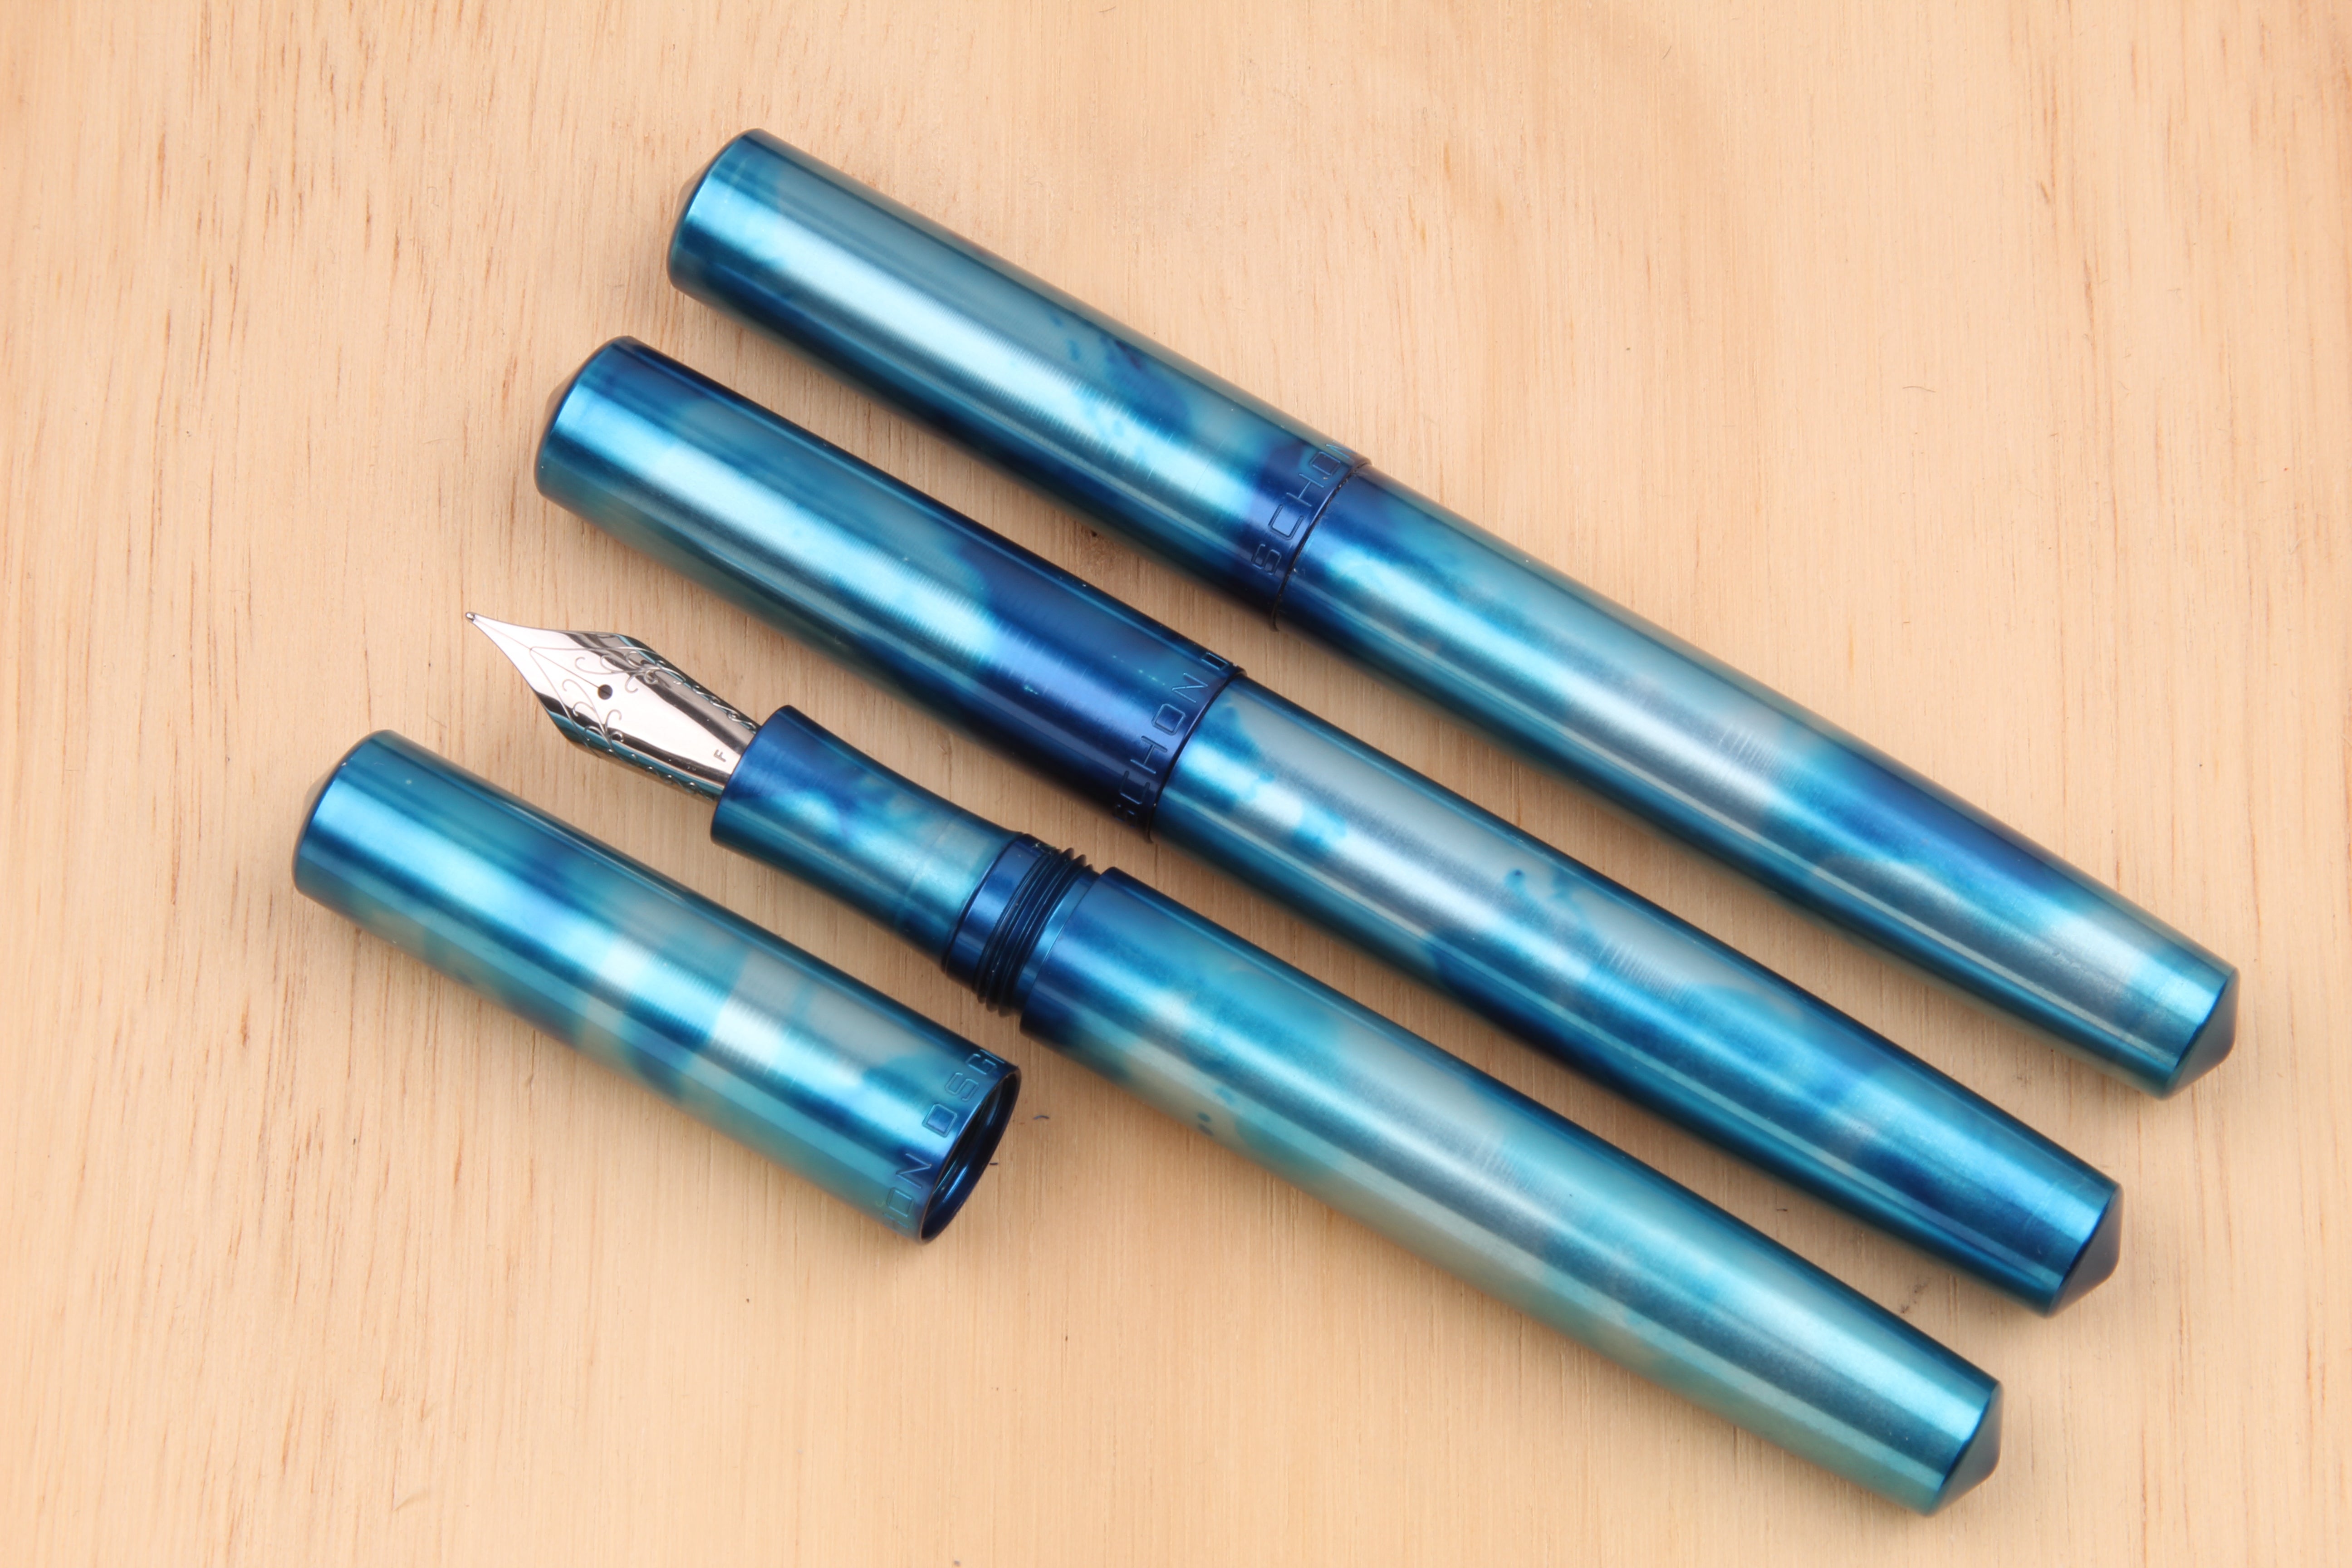 Anodized Aluminum "Full Sized" Fountain Pen